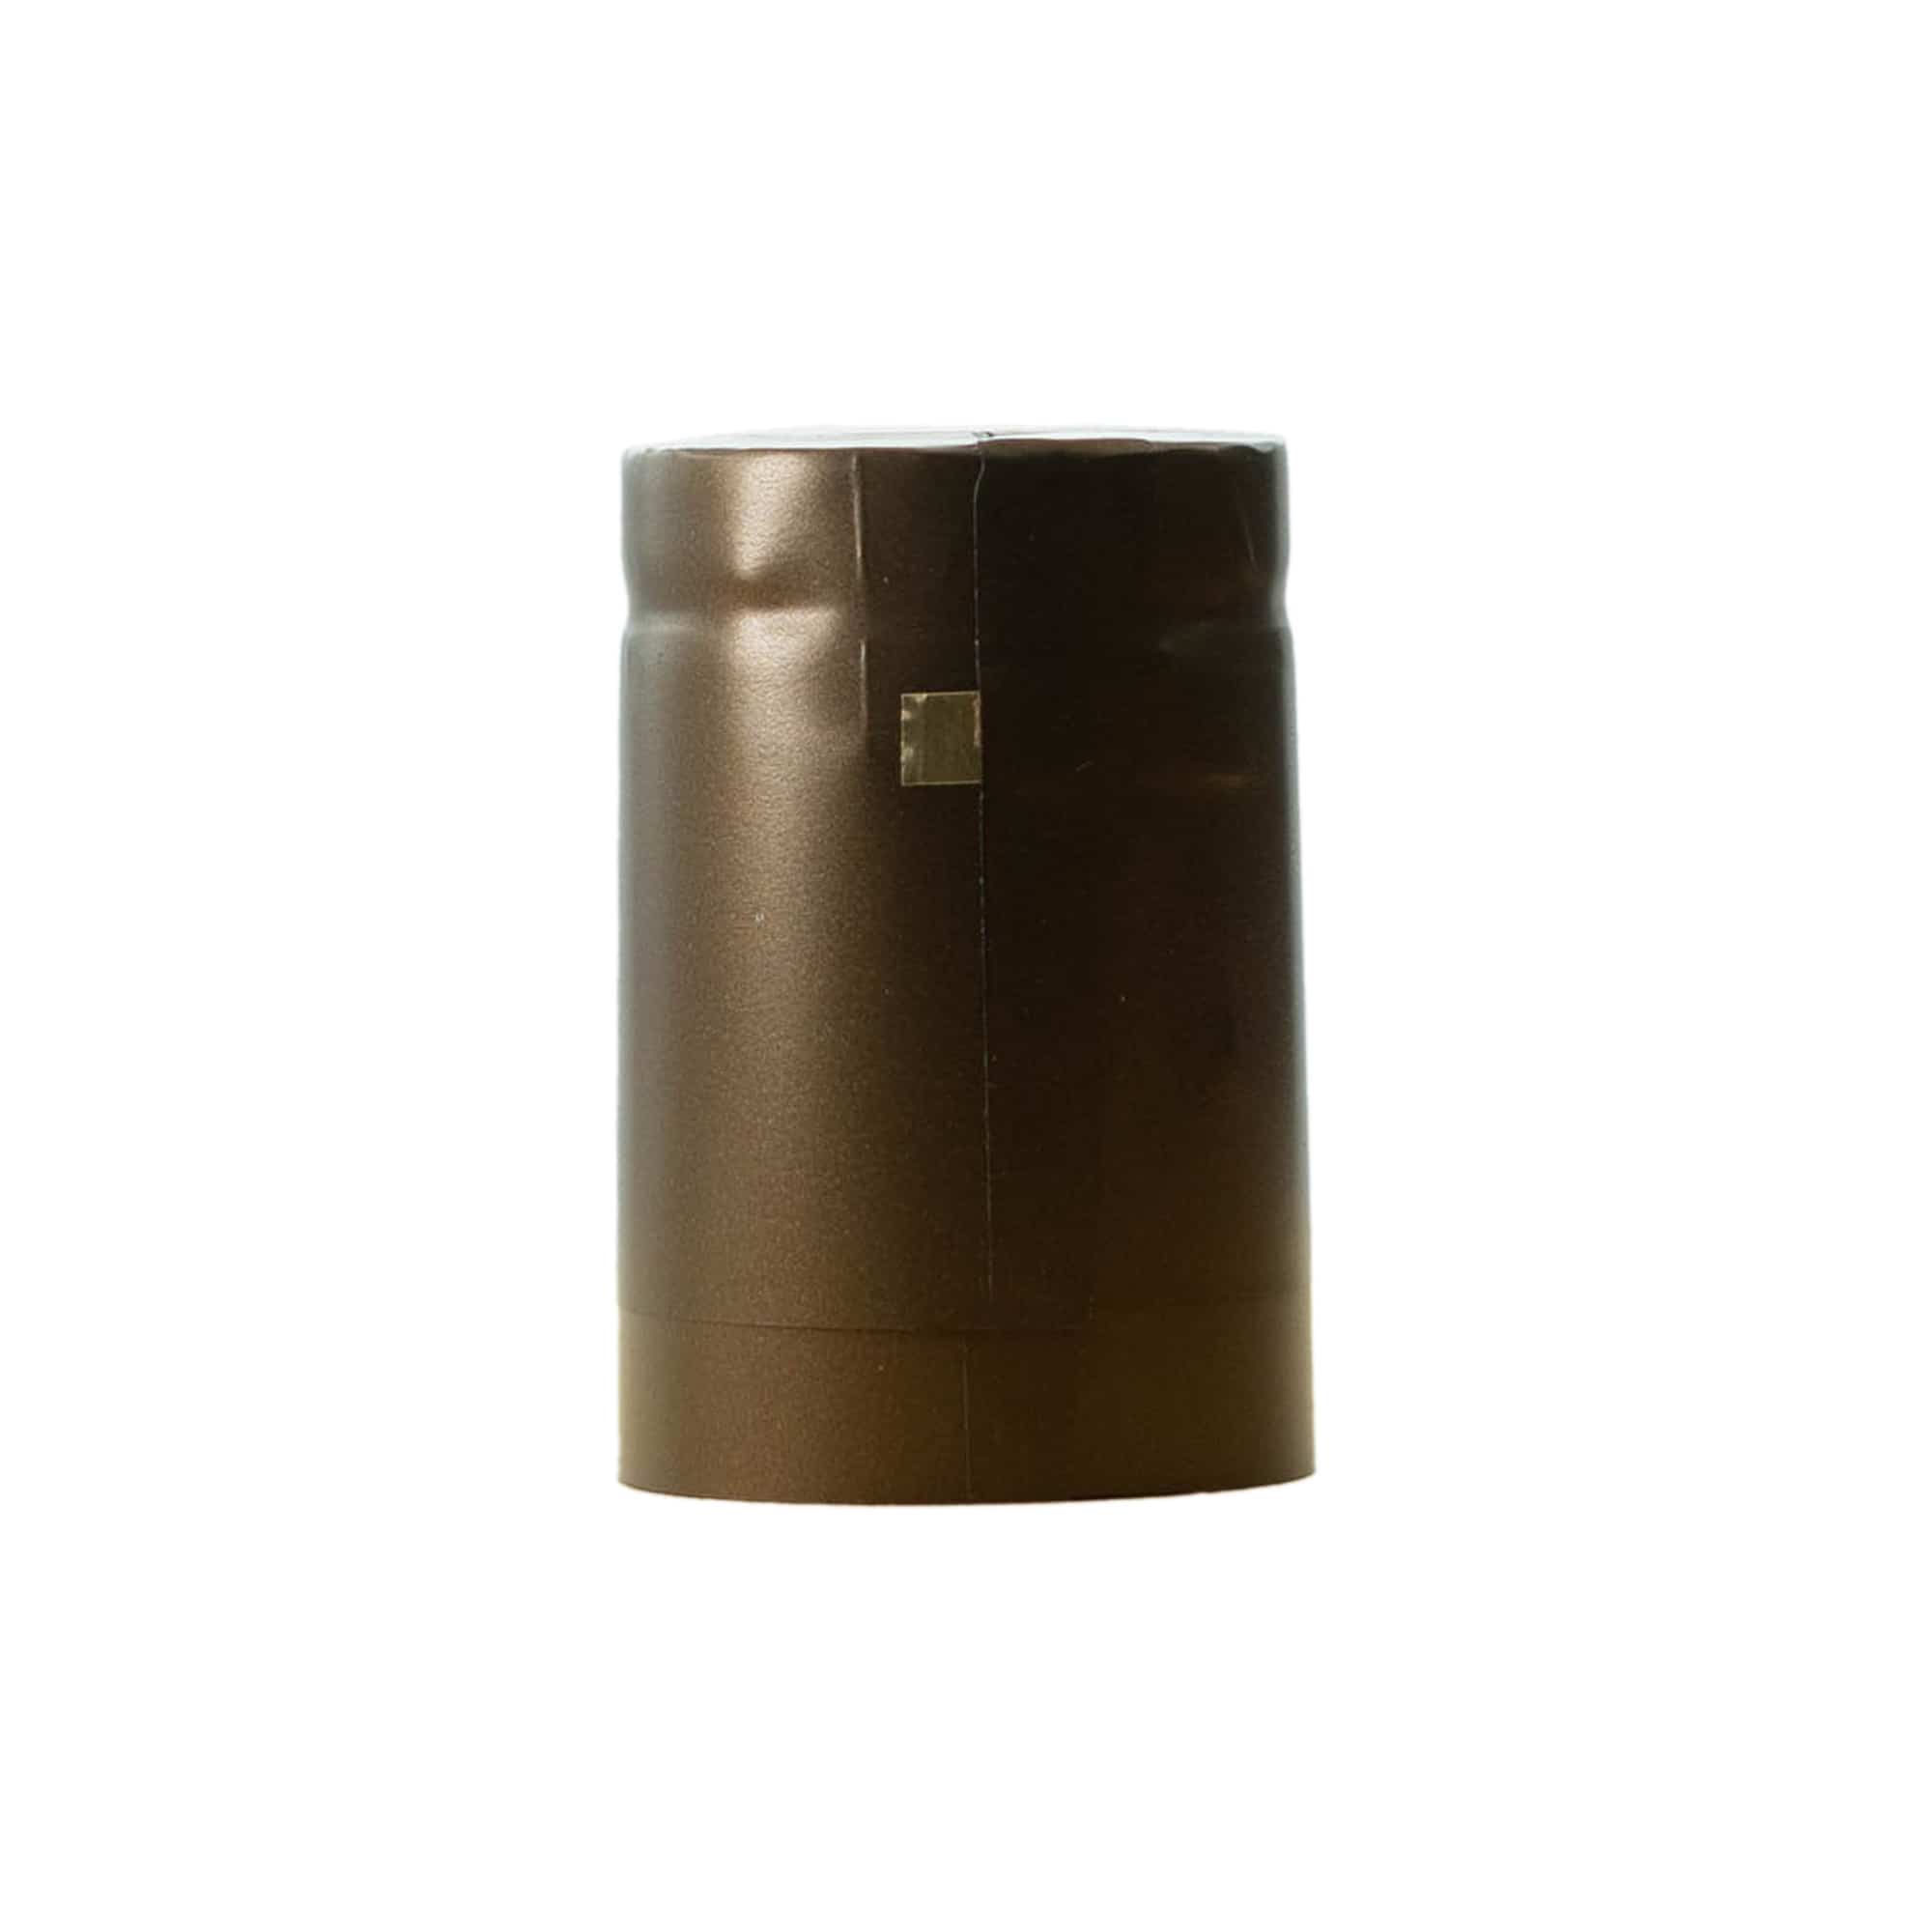 Heat shrink capsule 32x41, PVC plastic, gold coin